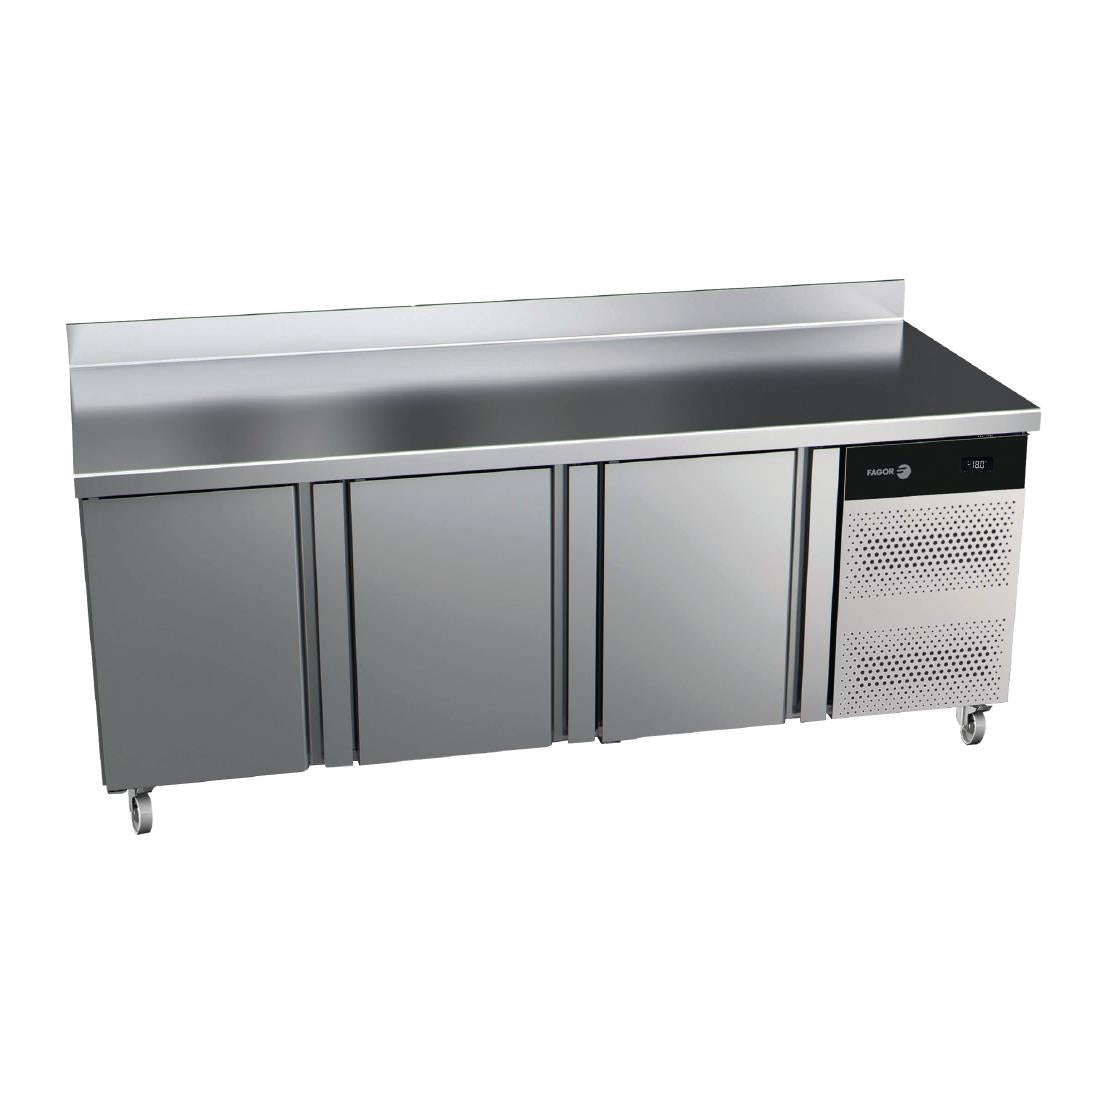 FU025 Fagor Concept 700 Gastronorm Freezer Counter 3 Door CCN-3G JD Catering Equipment Solutions Ltd